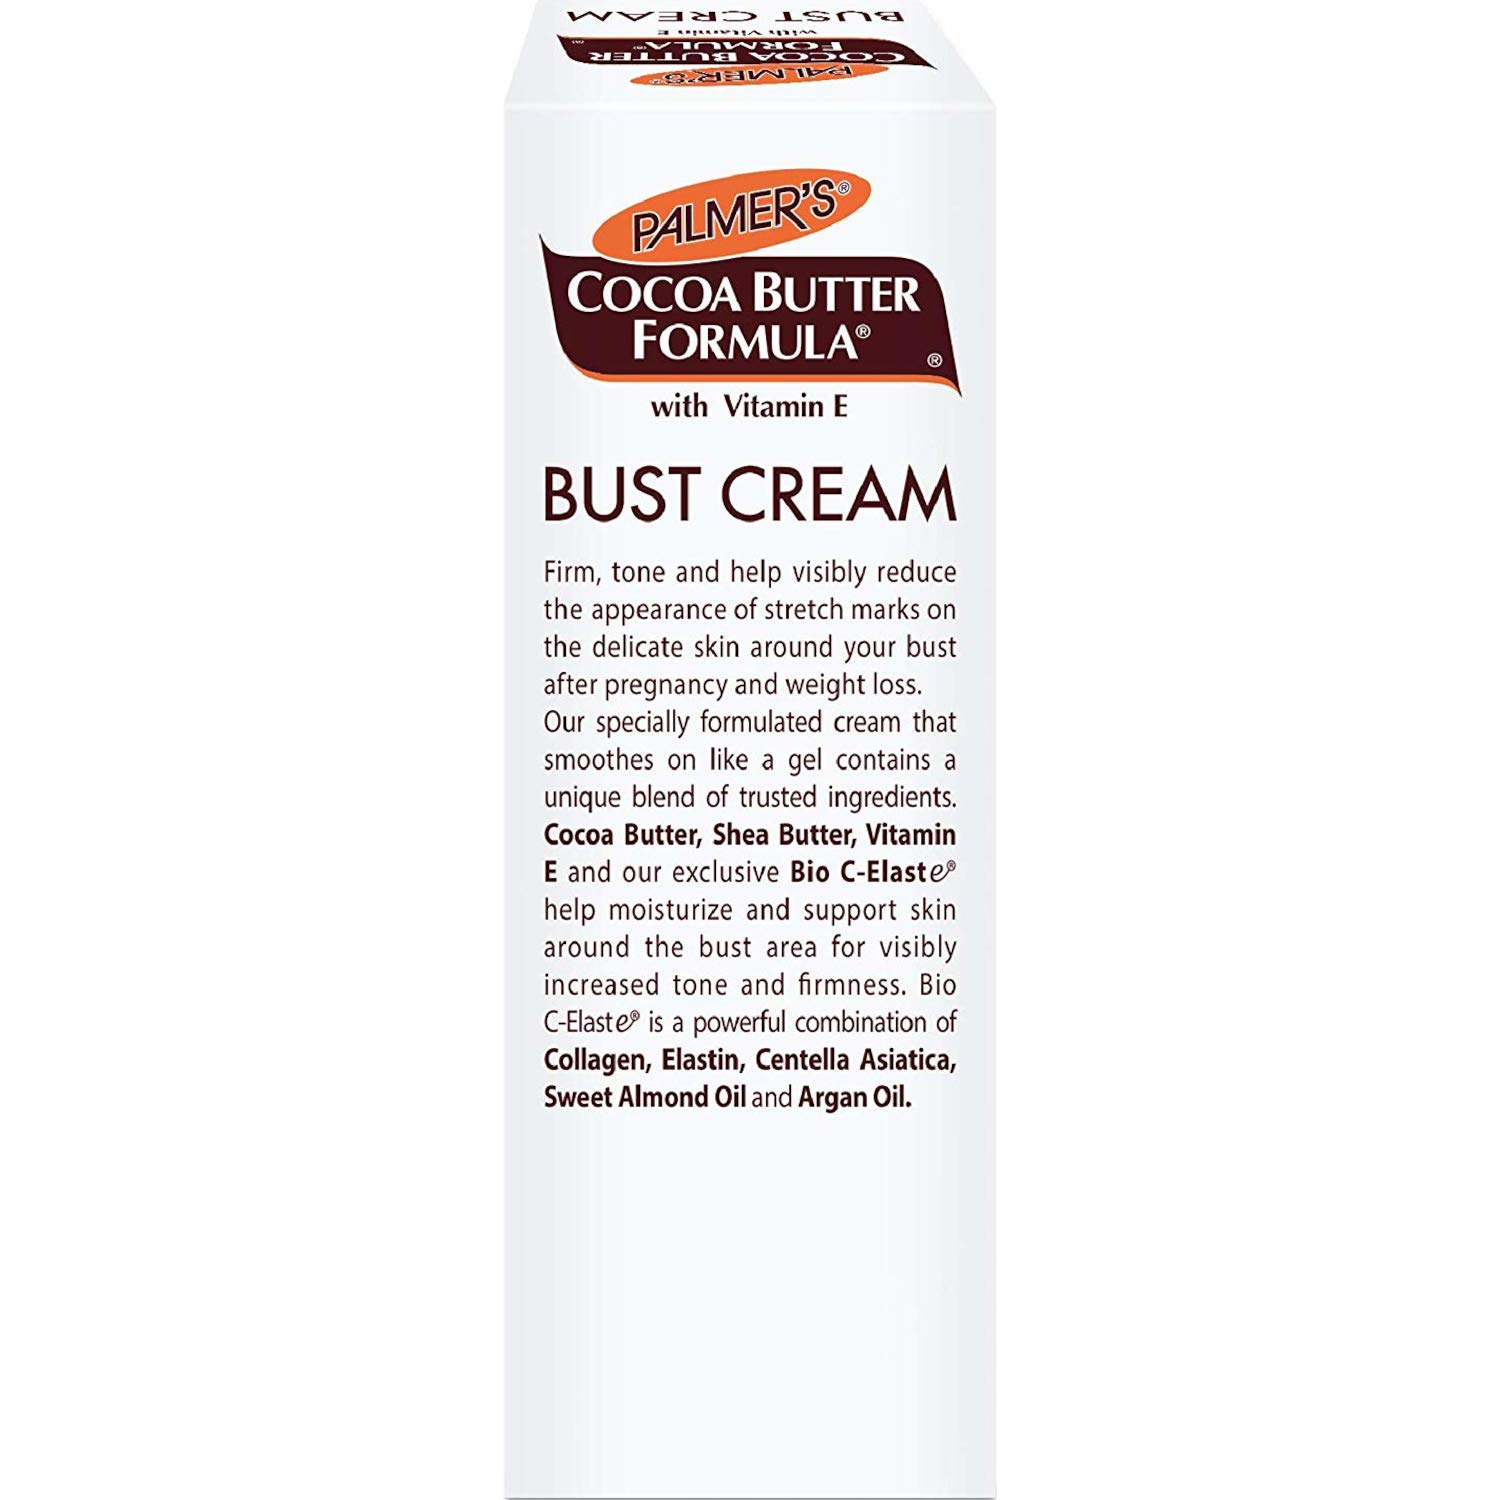 Palmer's Cocoa Butter Formula with Vitamin E Bust Cream 125g